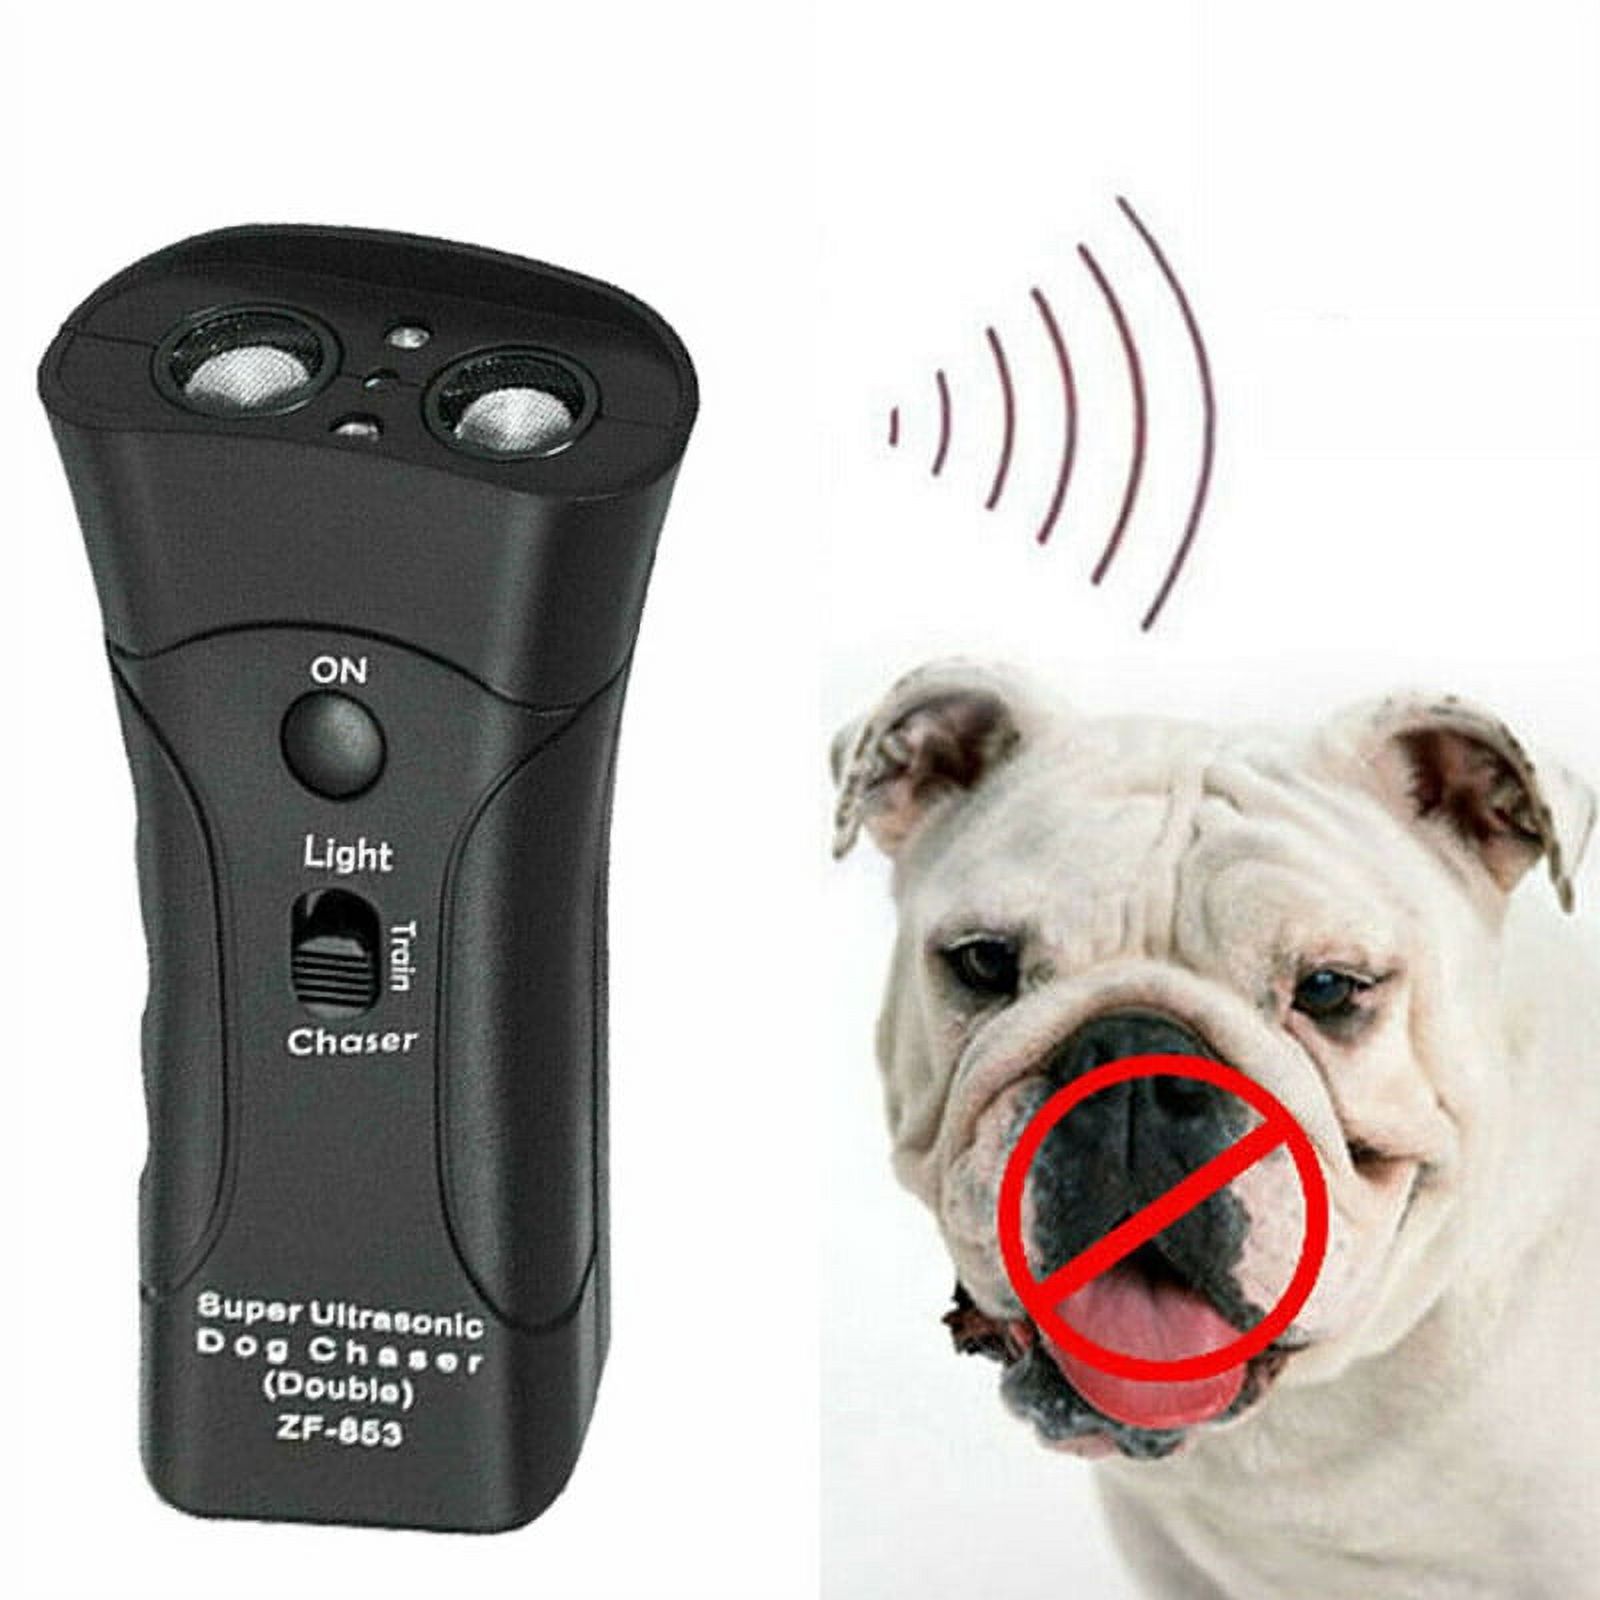 Ultrasonic Anti Dog Barking Pets Trainer LED Gentle Pet gentle Sonic Tools - image 1 of 5